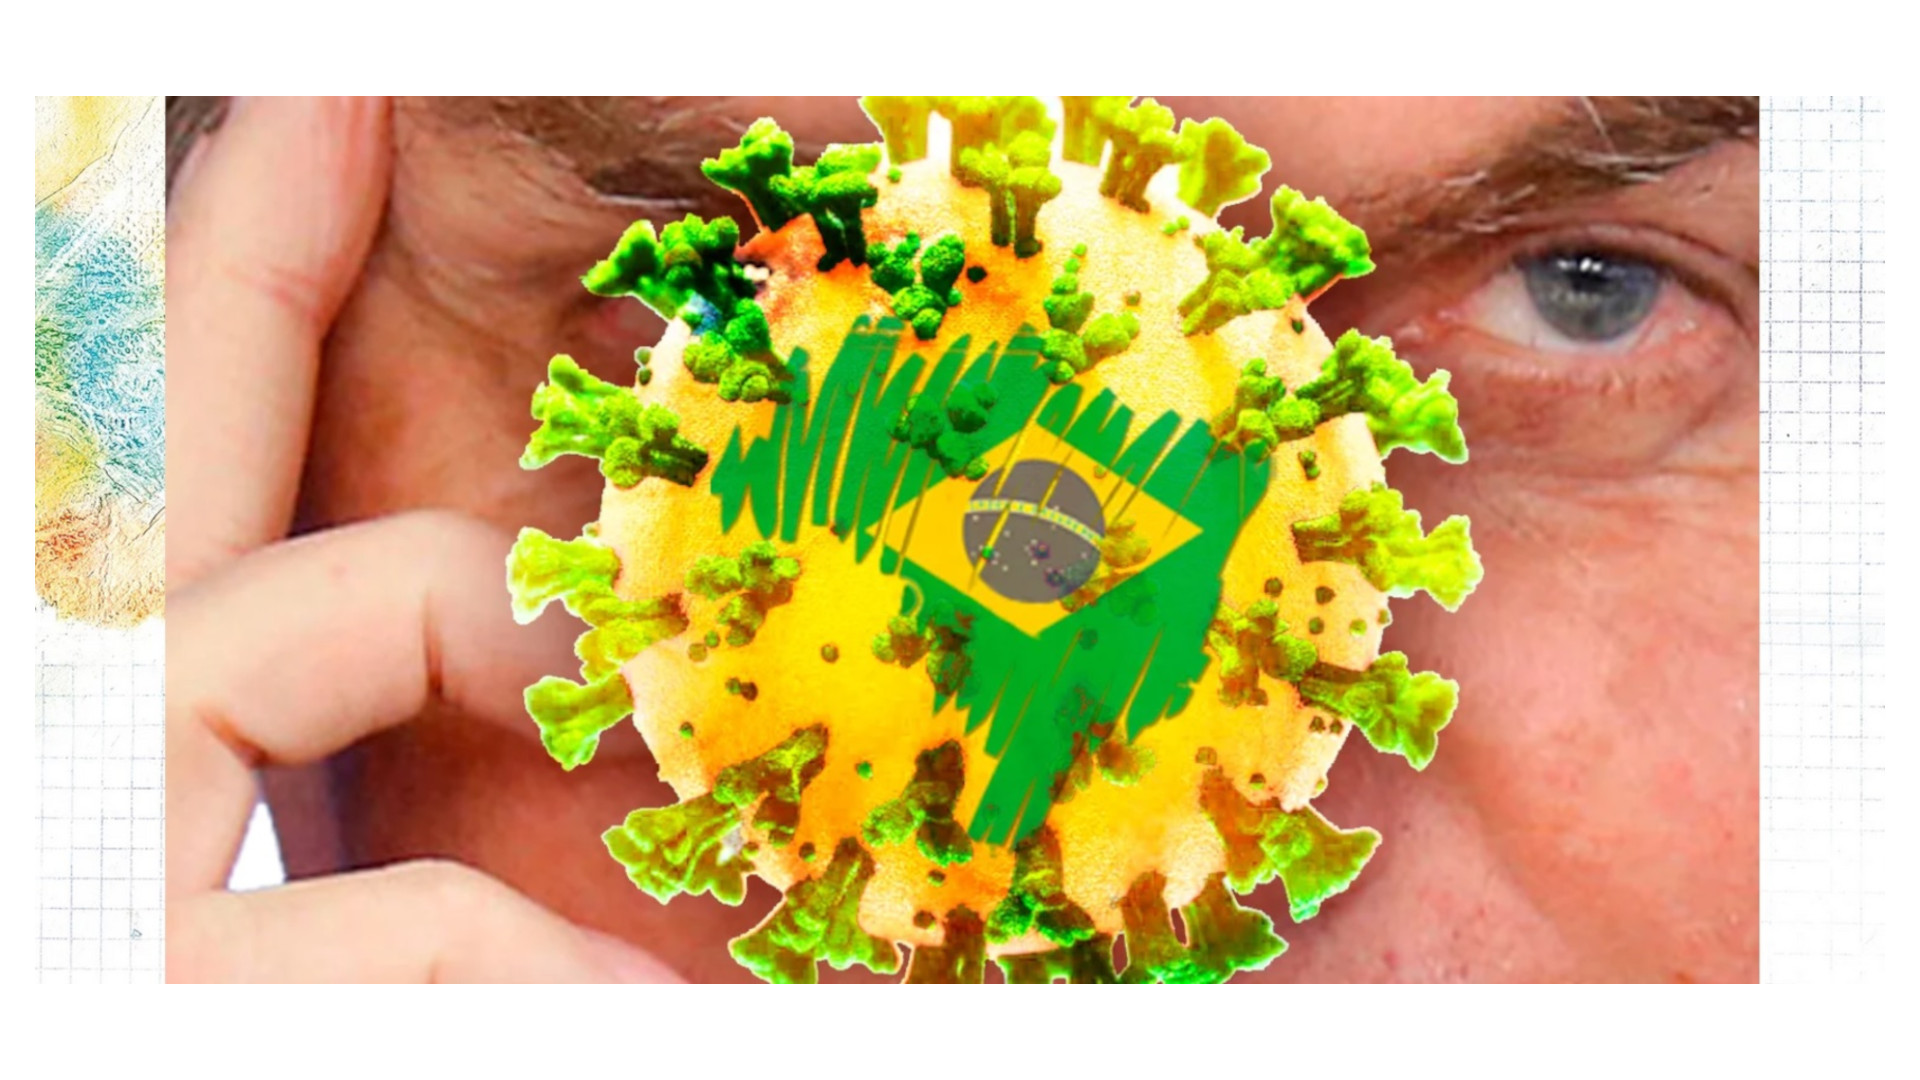 Brasil: A pandemia e a virulência do sistema